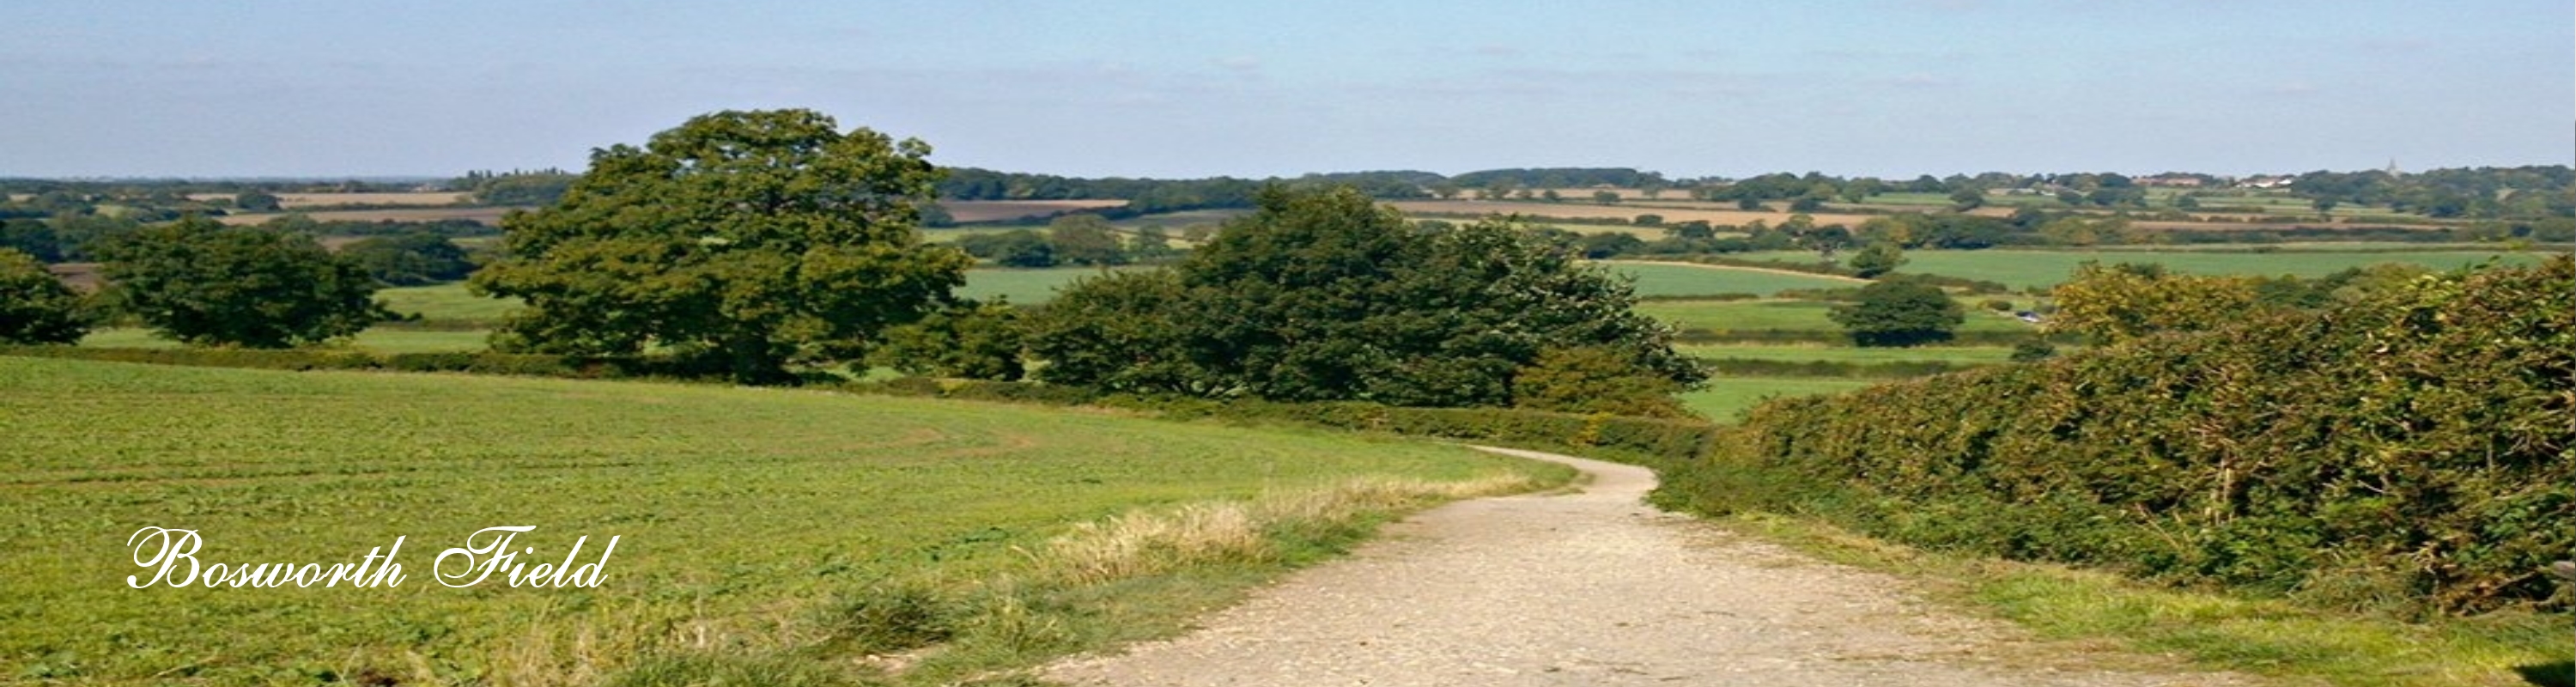 Bosworth field